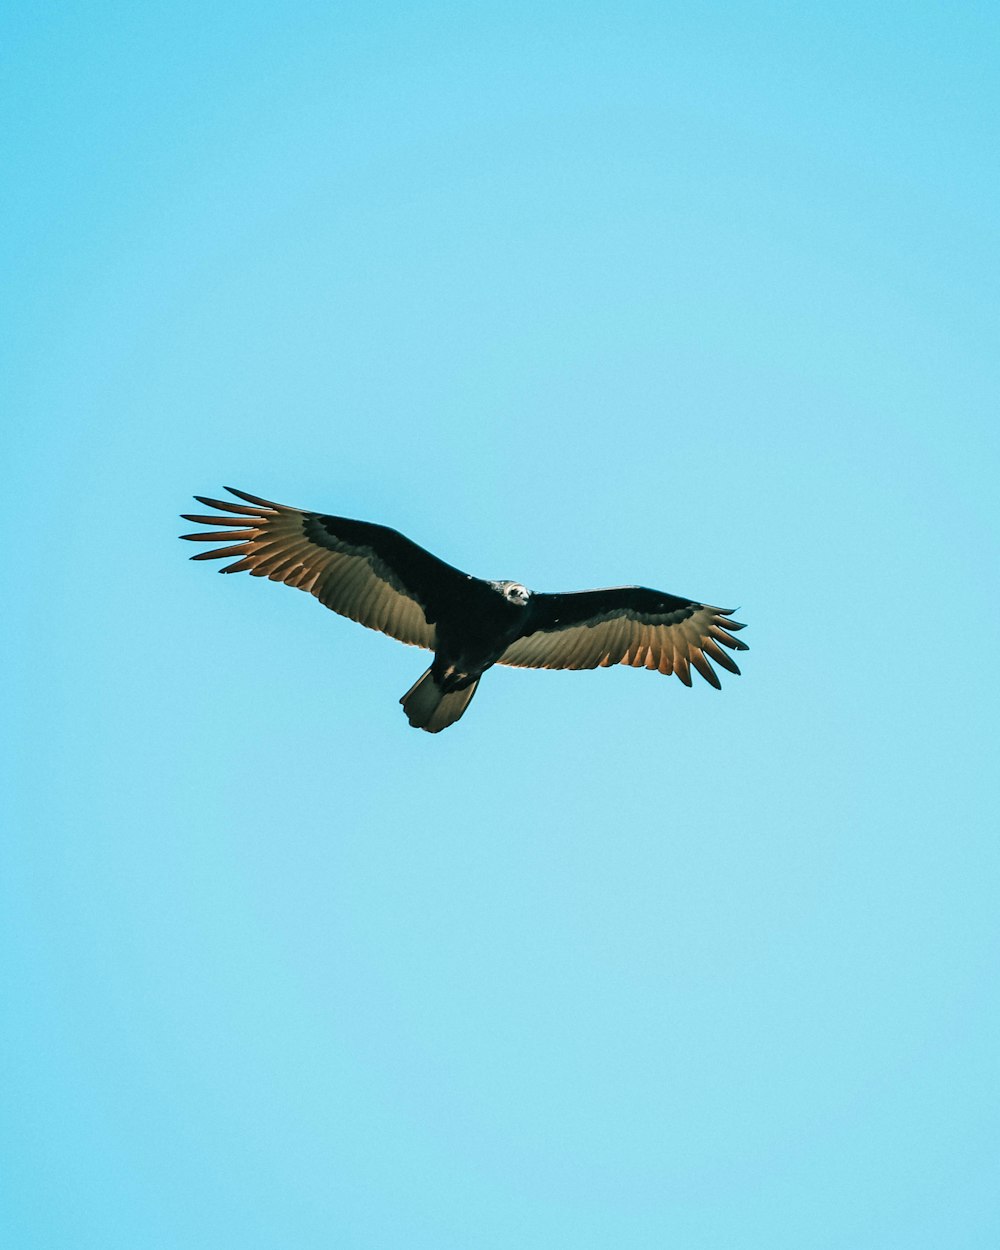 black and grey eagle on flight under clear blue sky